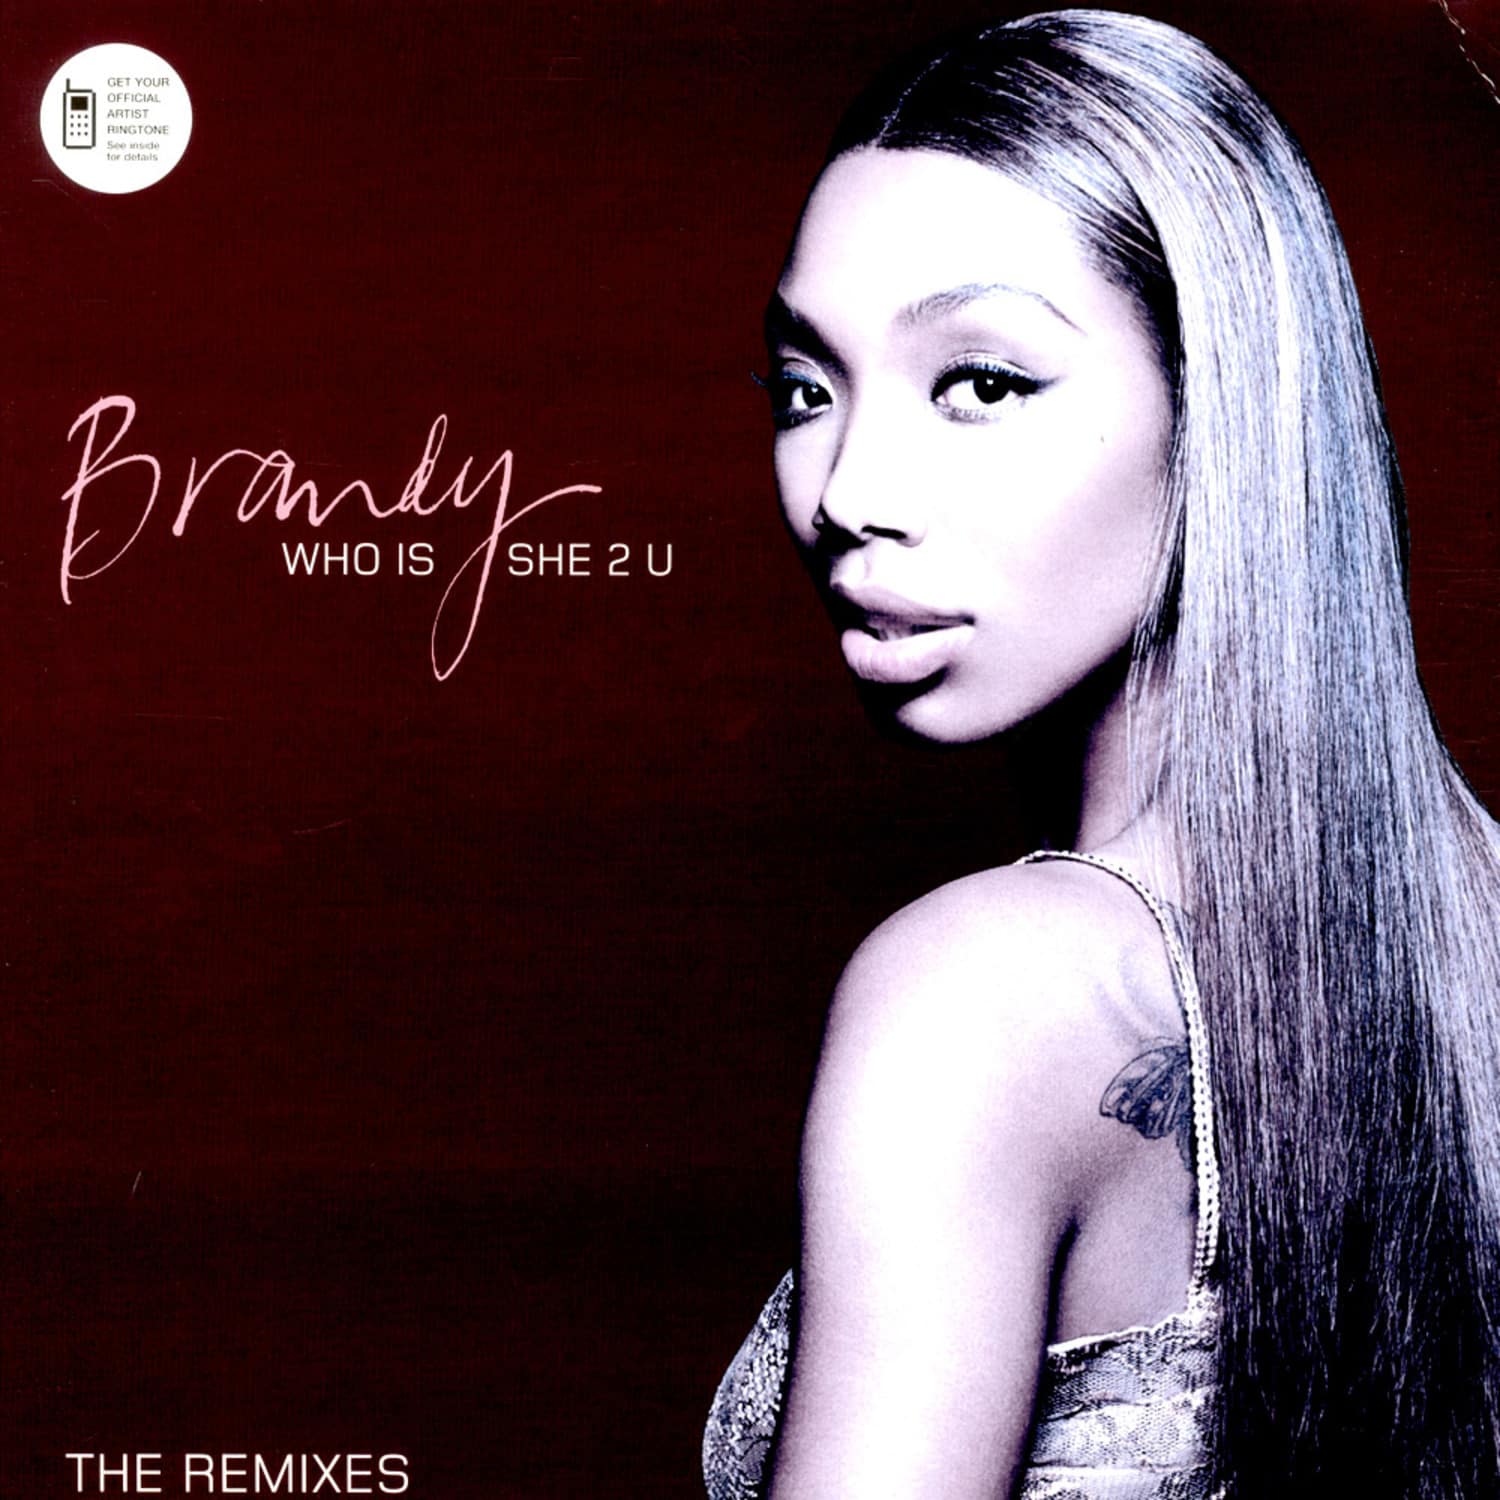 Brandy - WHO IS SHE 2 U REMIXES